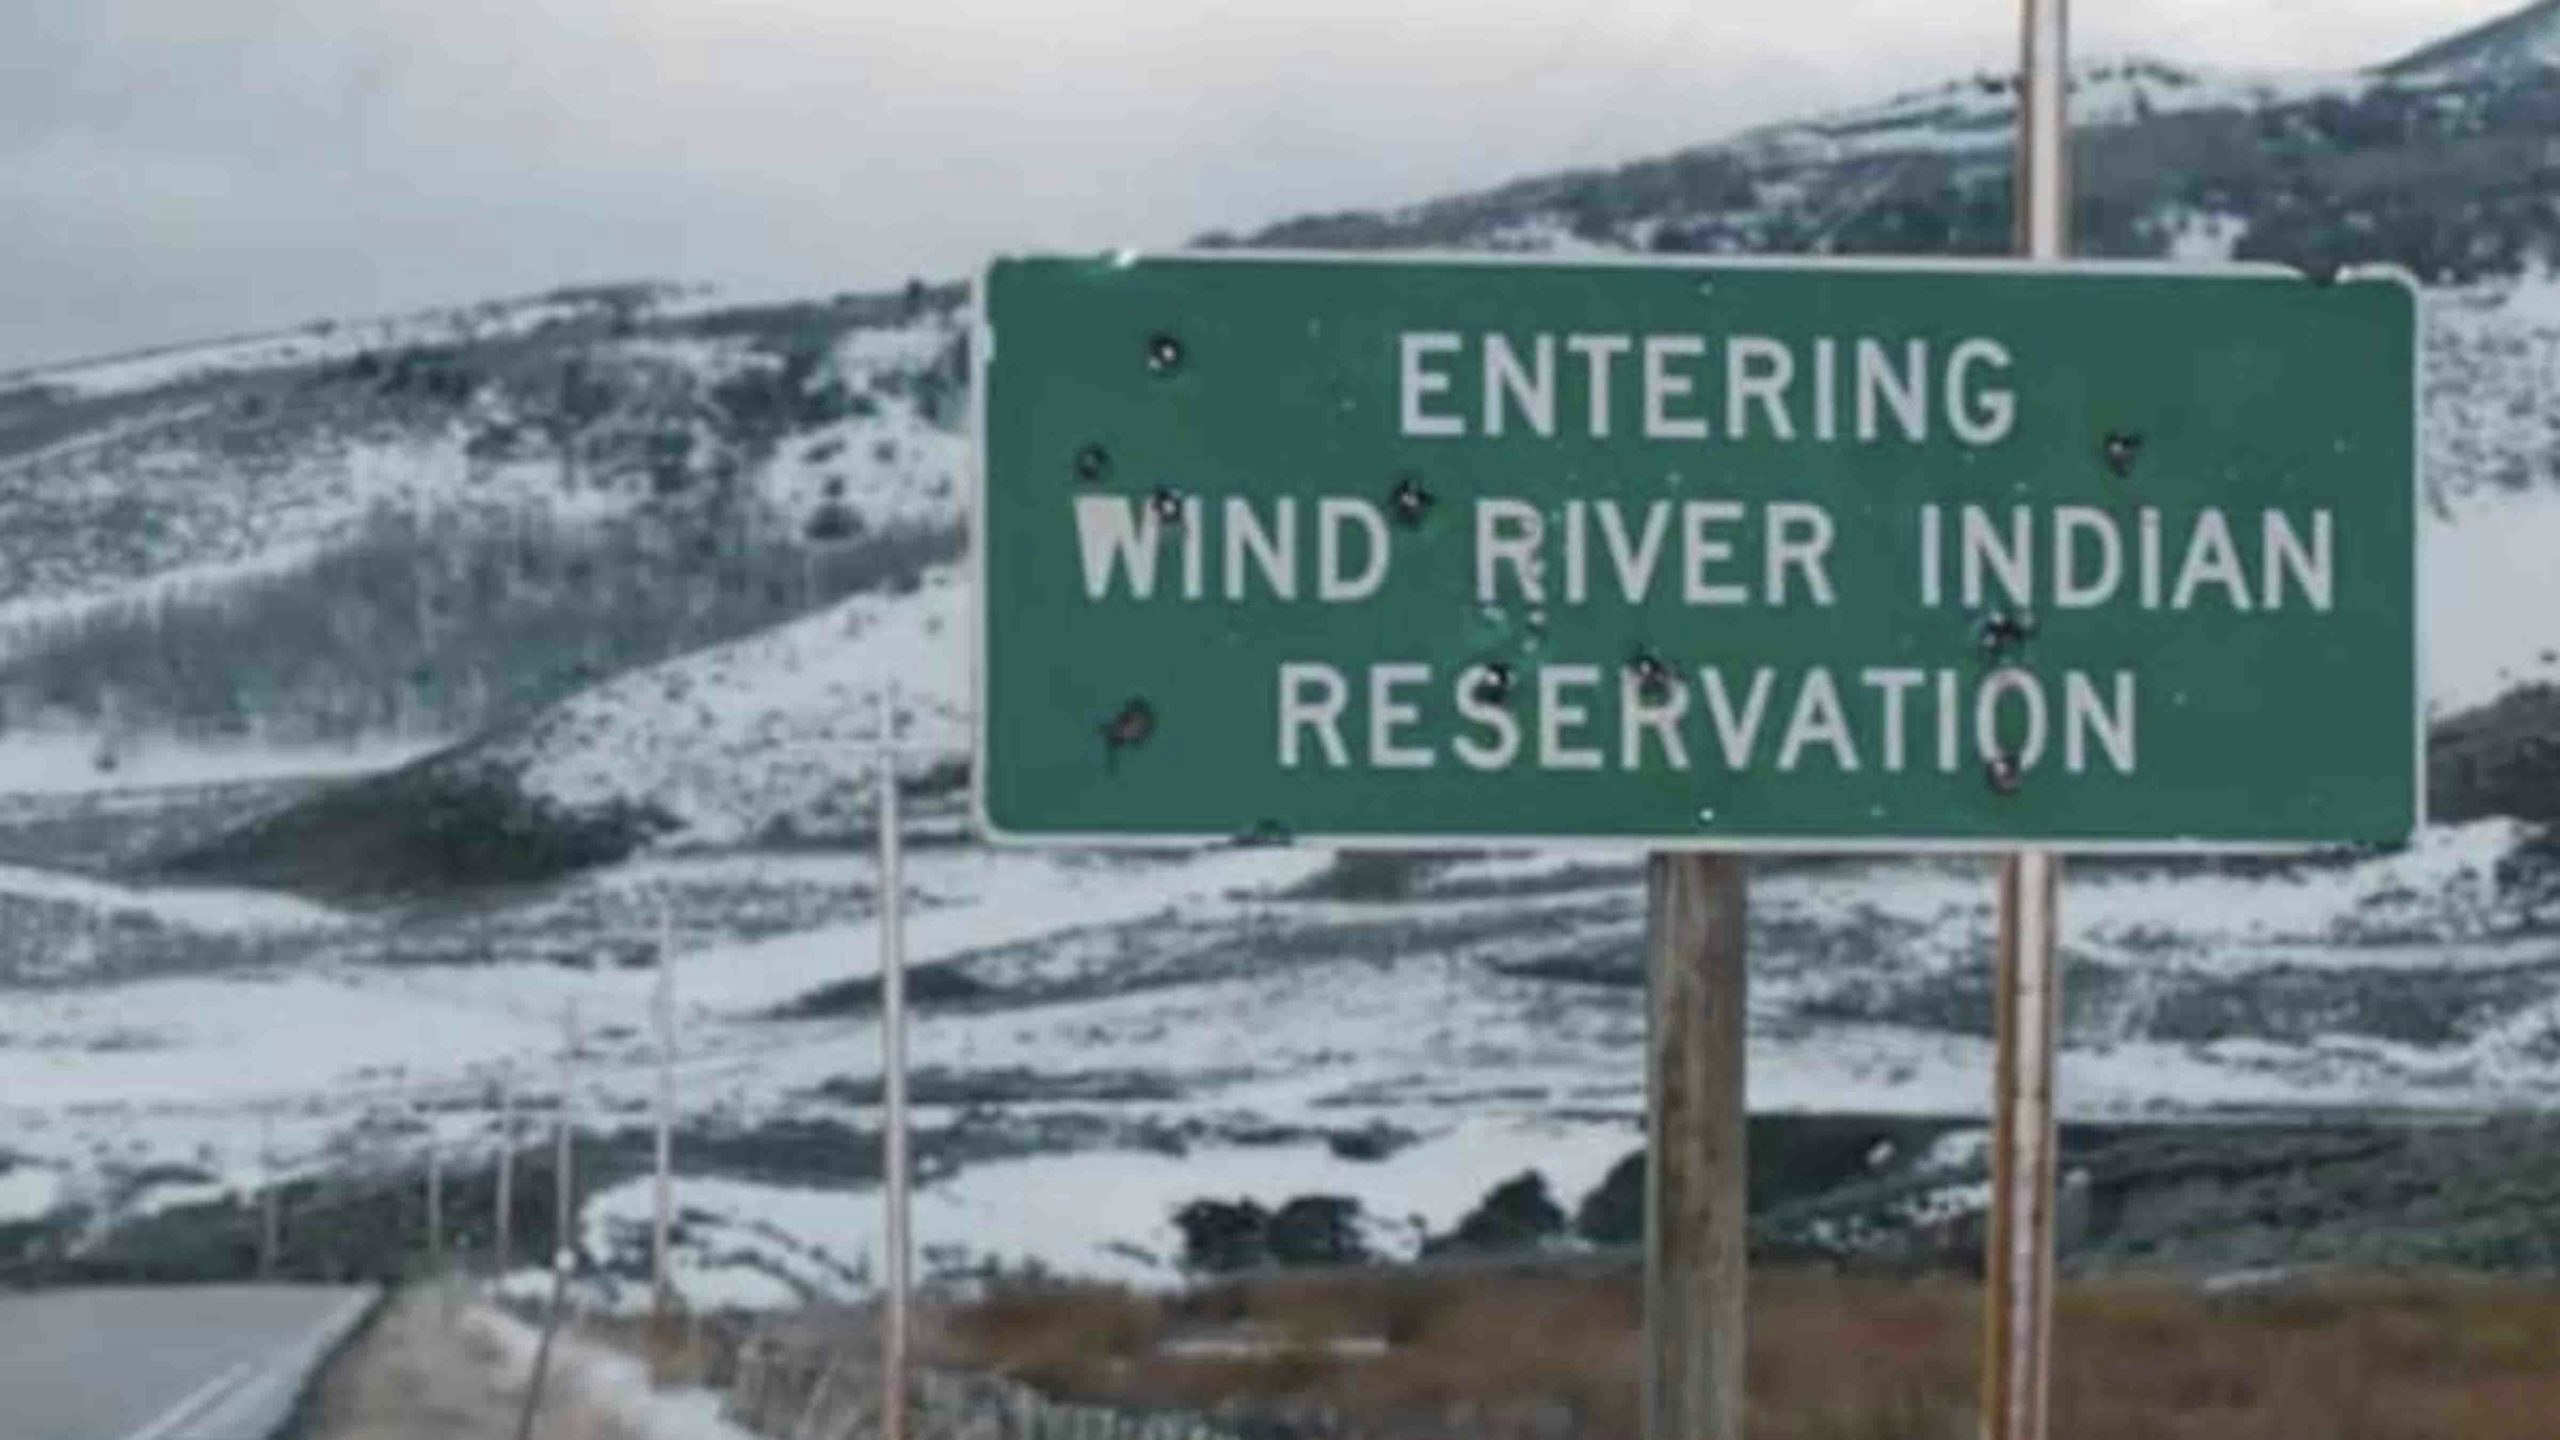 Wind river reservation sign 3 16 22 scaled